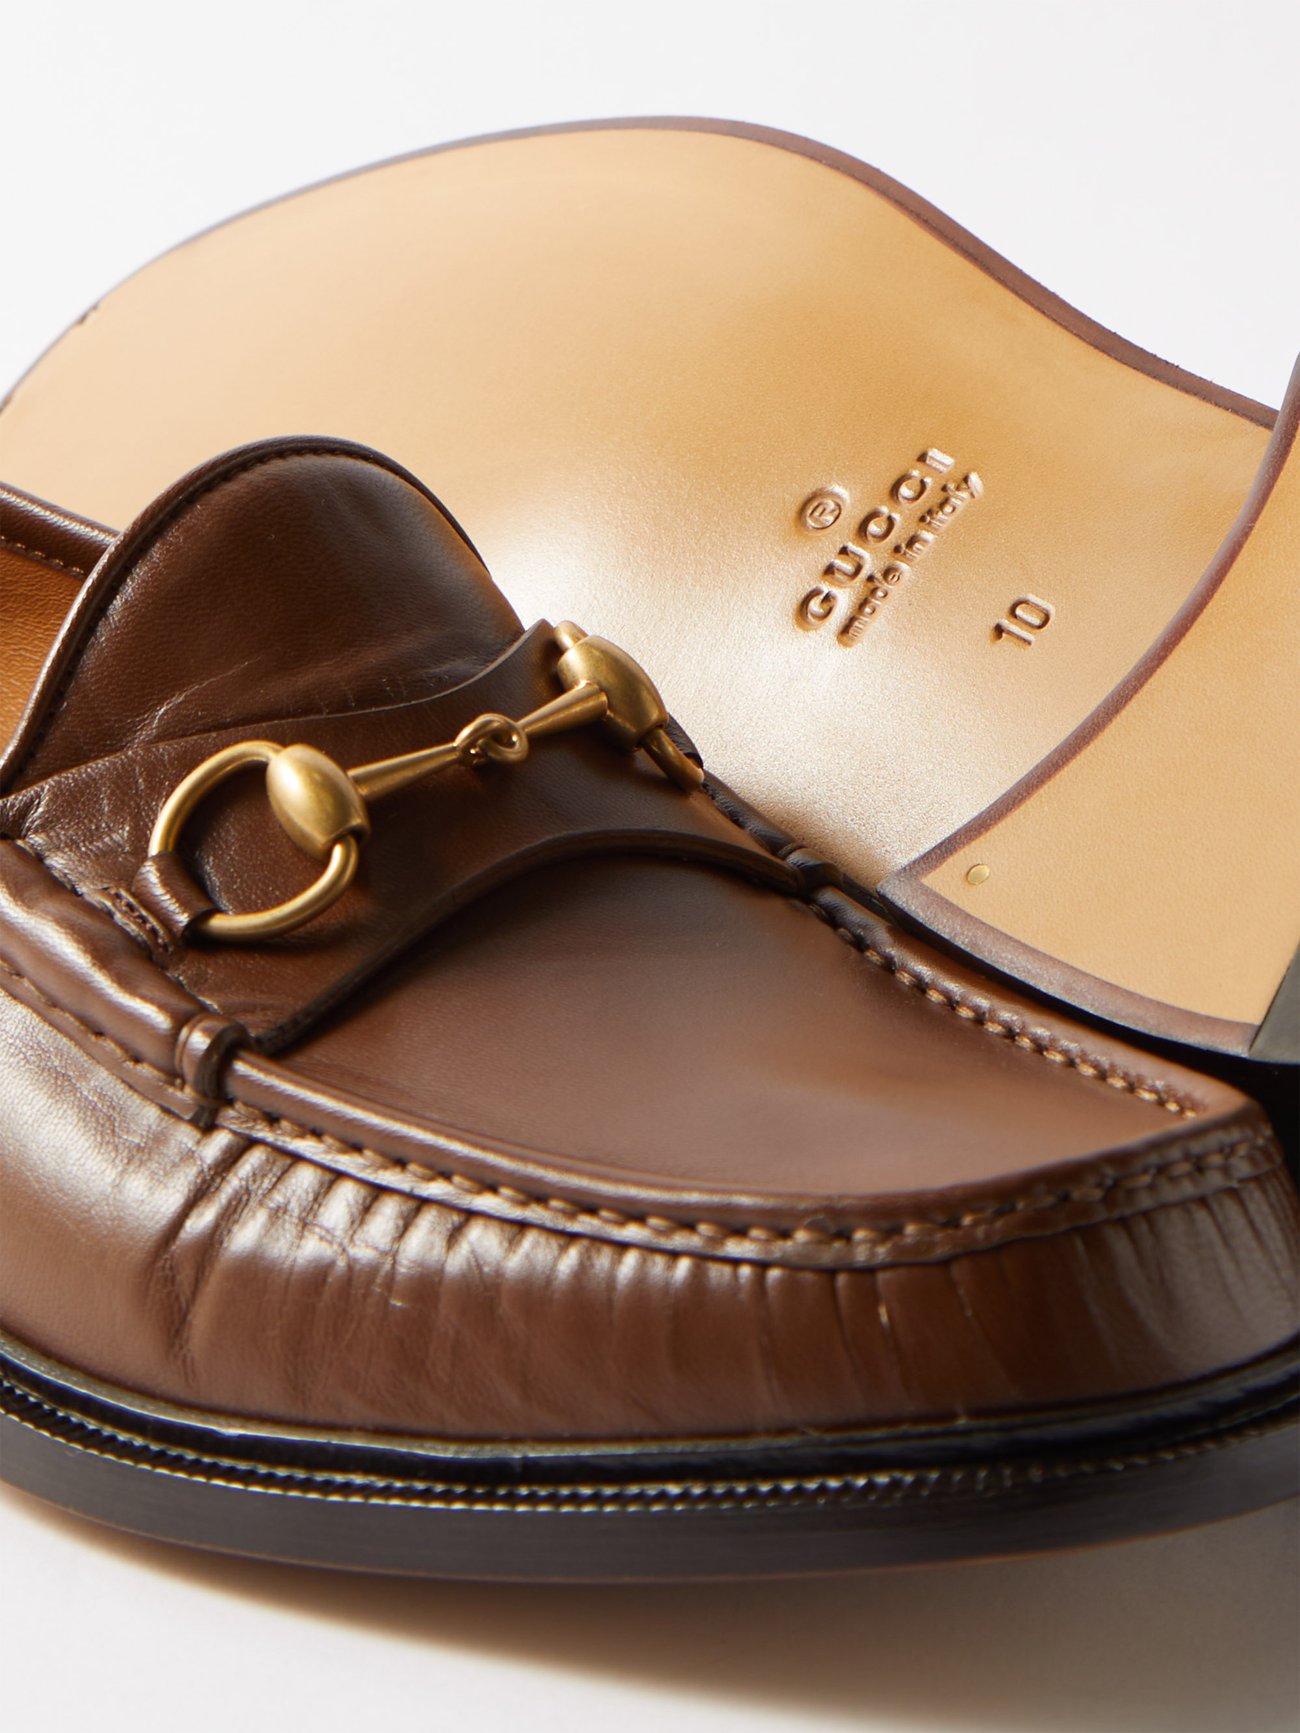 Gucci Men's New $920 Horsebit Loafers Shoes US 11.5